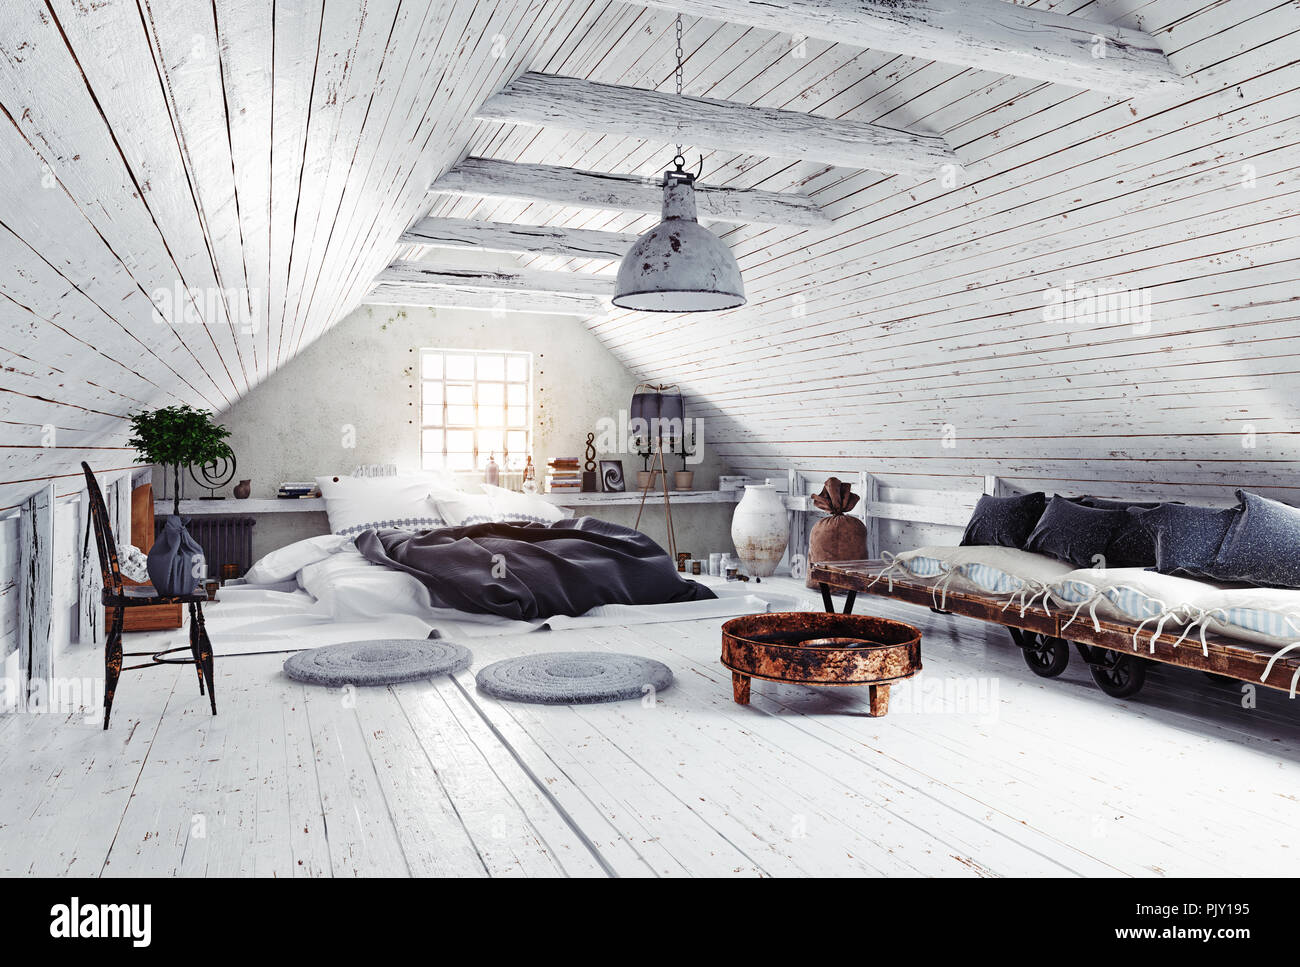 Moderne Schlafzimmer im Dachgeschoss. 3D-rendering Innenraumkonzept Stockfoto